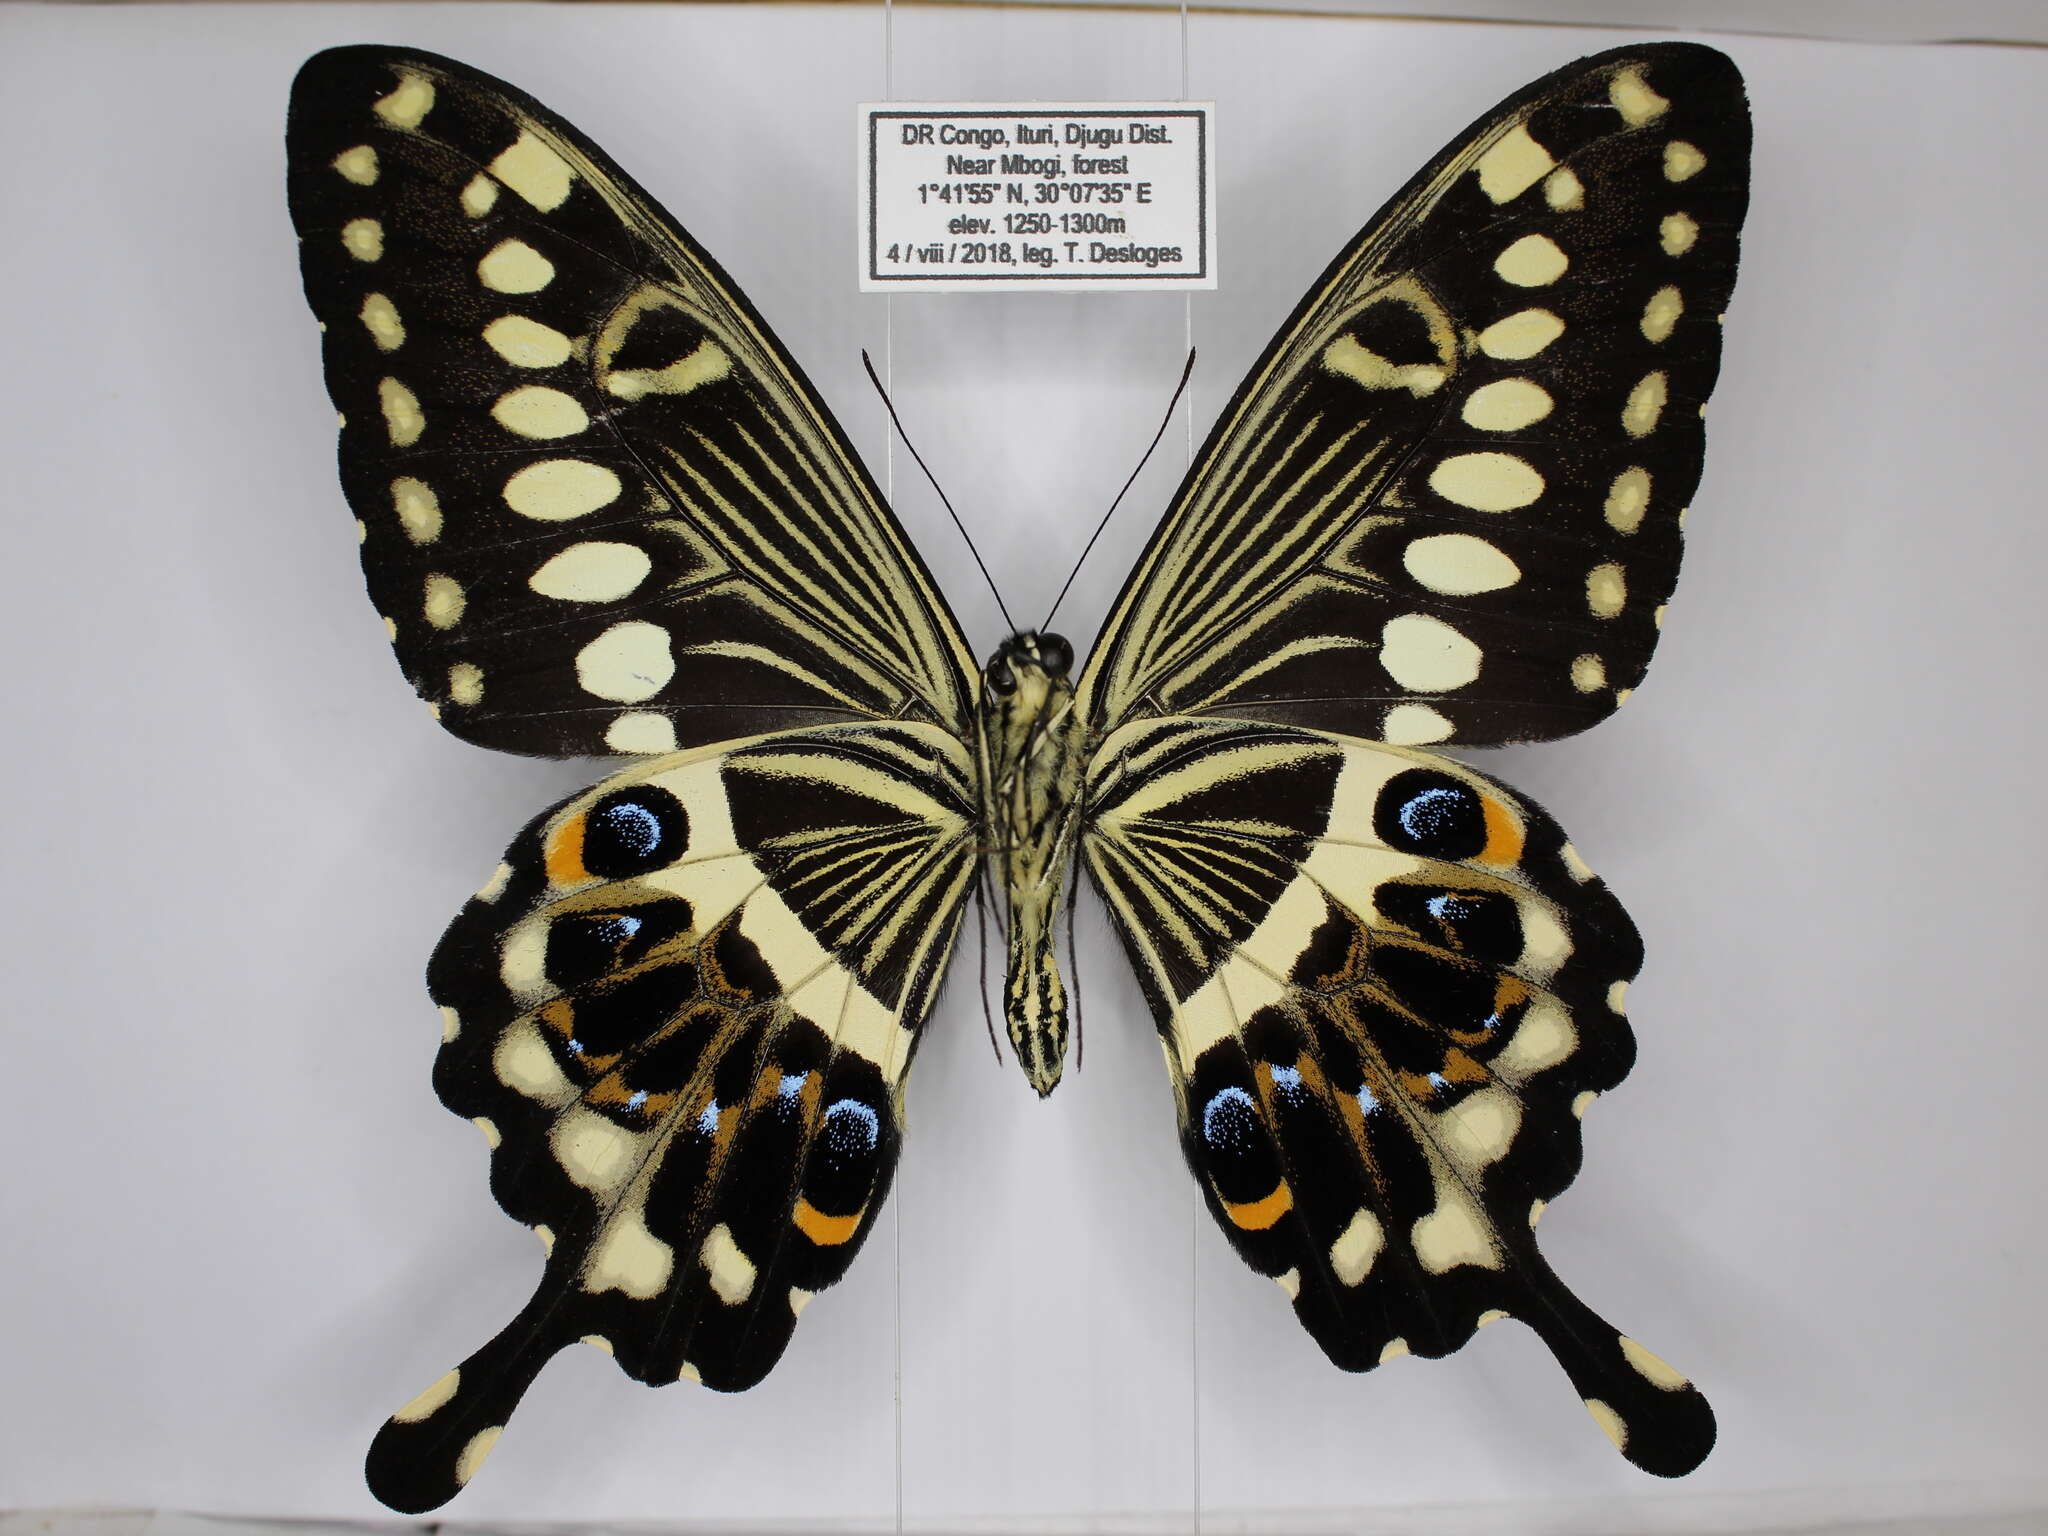 Image of Papilio lormieri Distant 1874